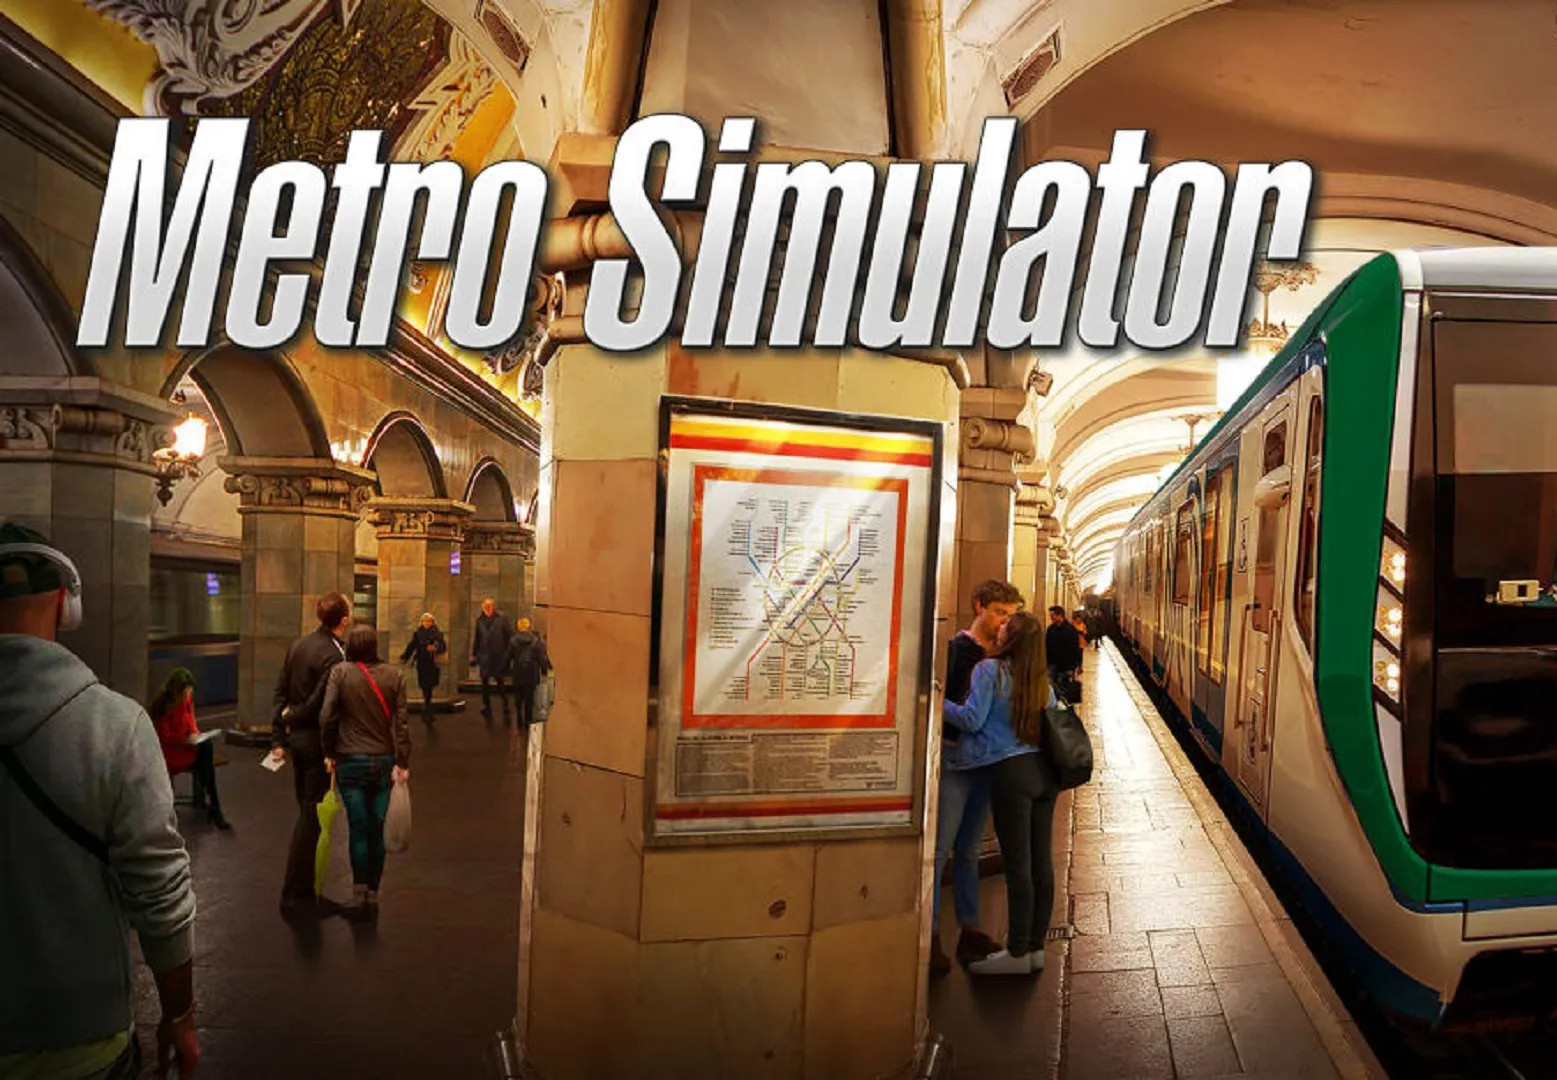 Metro Simulator Steam CD Key